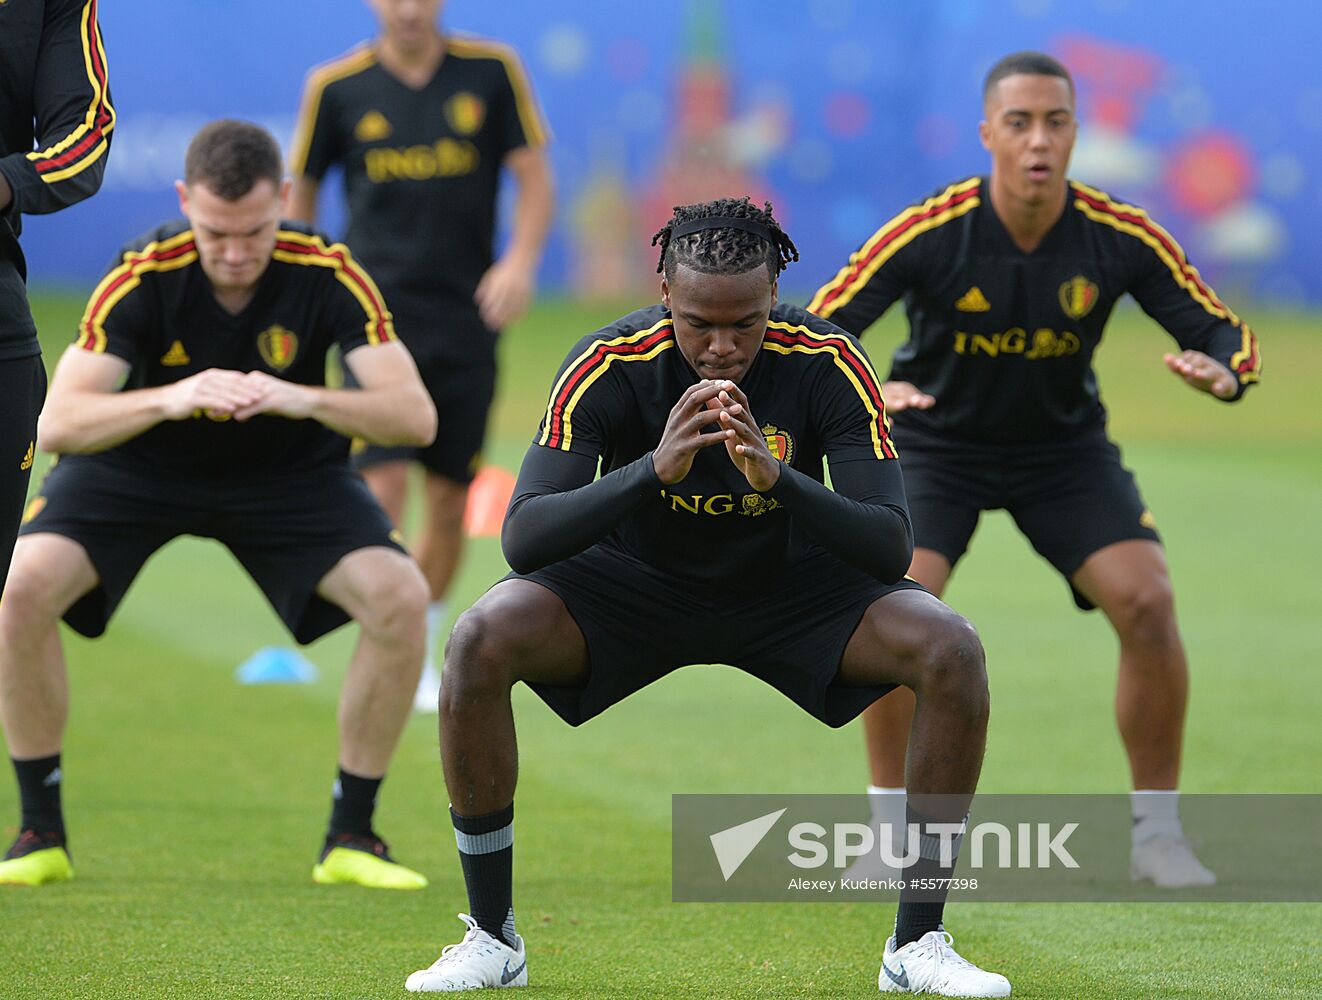 Russia World Cup Belgium Training